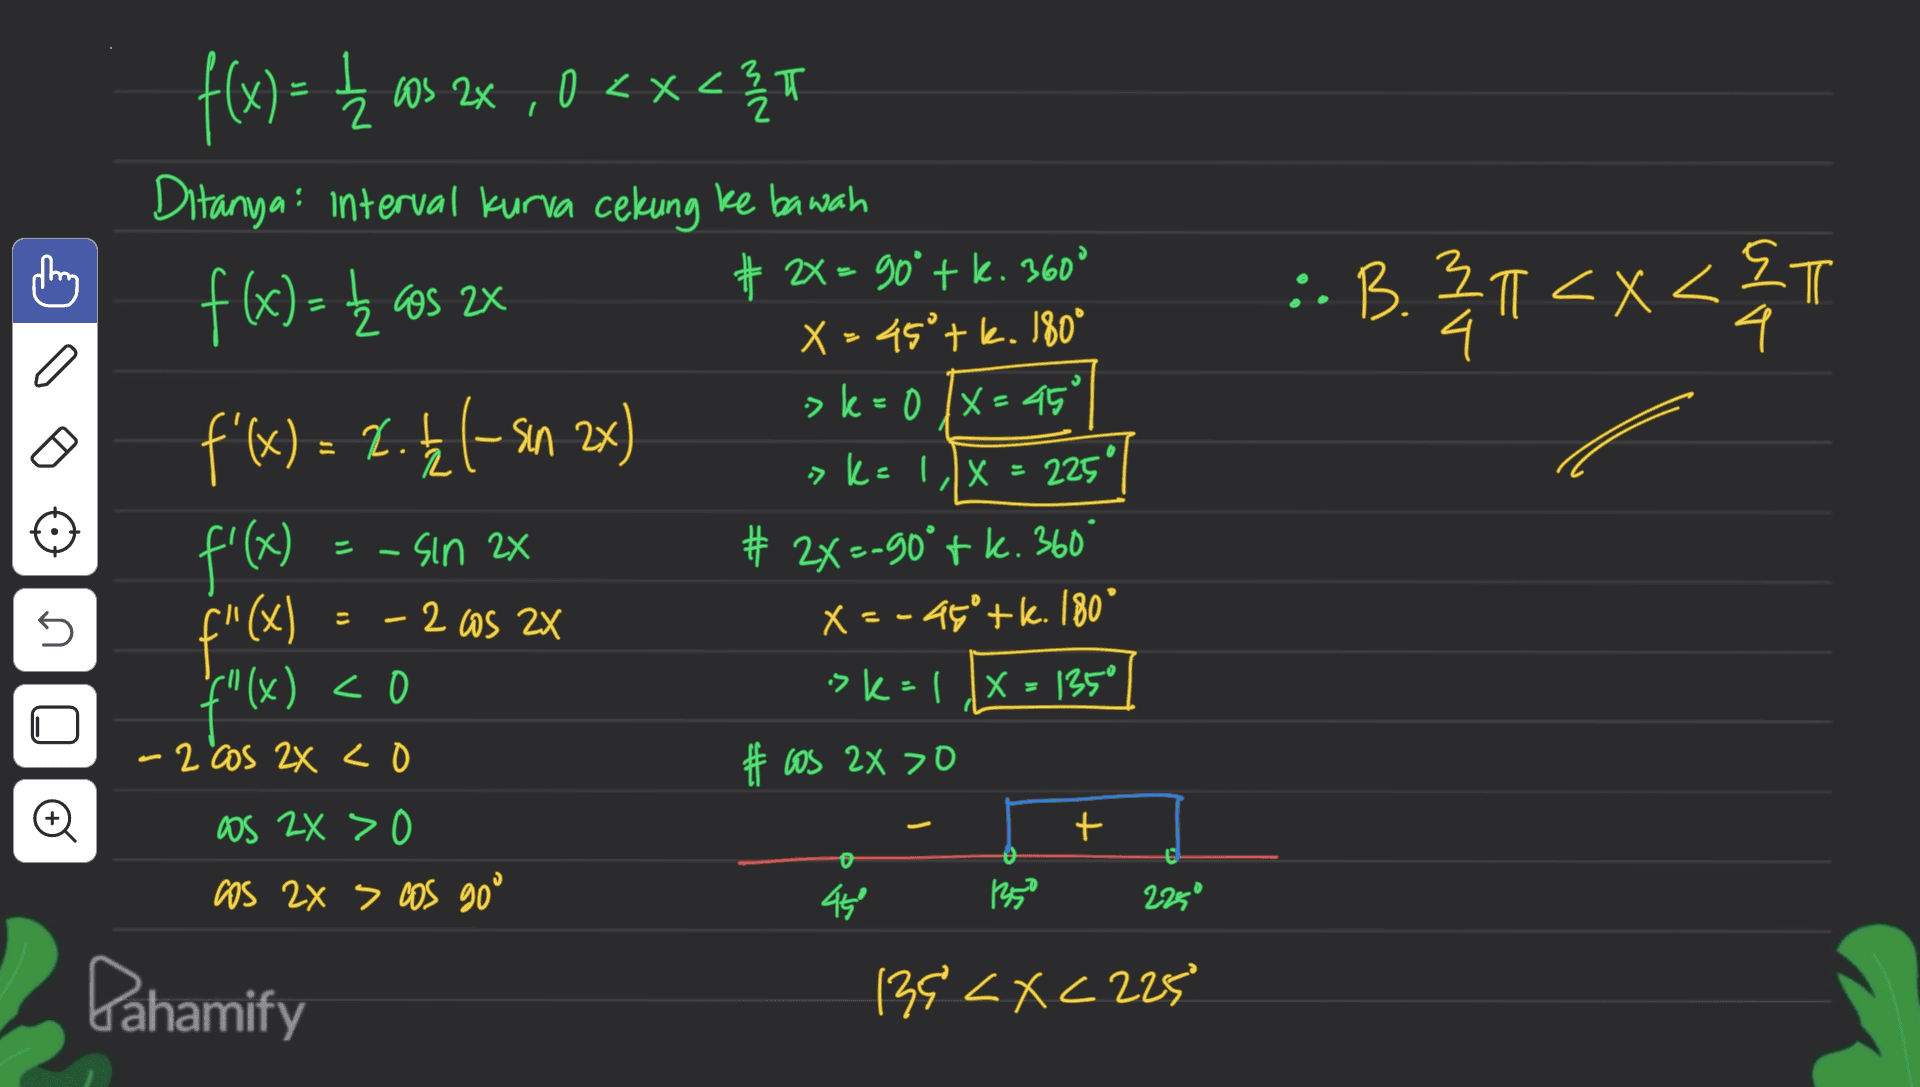 돌 :. B. 31<x<T x22m 4 a 3 f(x) = { ms 2x , 0<x<di Ź os 0x<3 T Ditanya: interval kurva cekung ke bawah f(x) = { us 2x # 2X = 90° tk. 360° os 2x X = 45°tk. 180° >k=0 /x=45° f'(x) = 2. 1 2 (- sn 2x) 2 > k=1/x = f'(x) -sin 2x # 2X=-90°tk. 360 - - 2 Os 2x X=-45+k. 180 f"(x) <0 sk=1 X=135° -2 cos 2x co #cos 2x >0 OS ZX > 0 os 2x > cos goo 1350 225" 1) 5 f"(x) + 450 2250 Dahamify 139 <x<225 